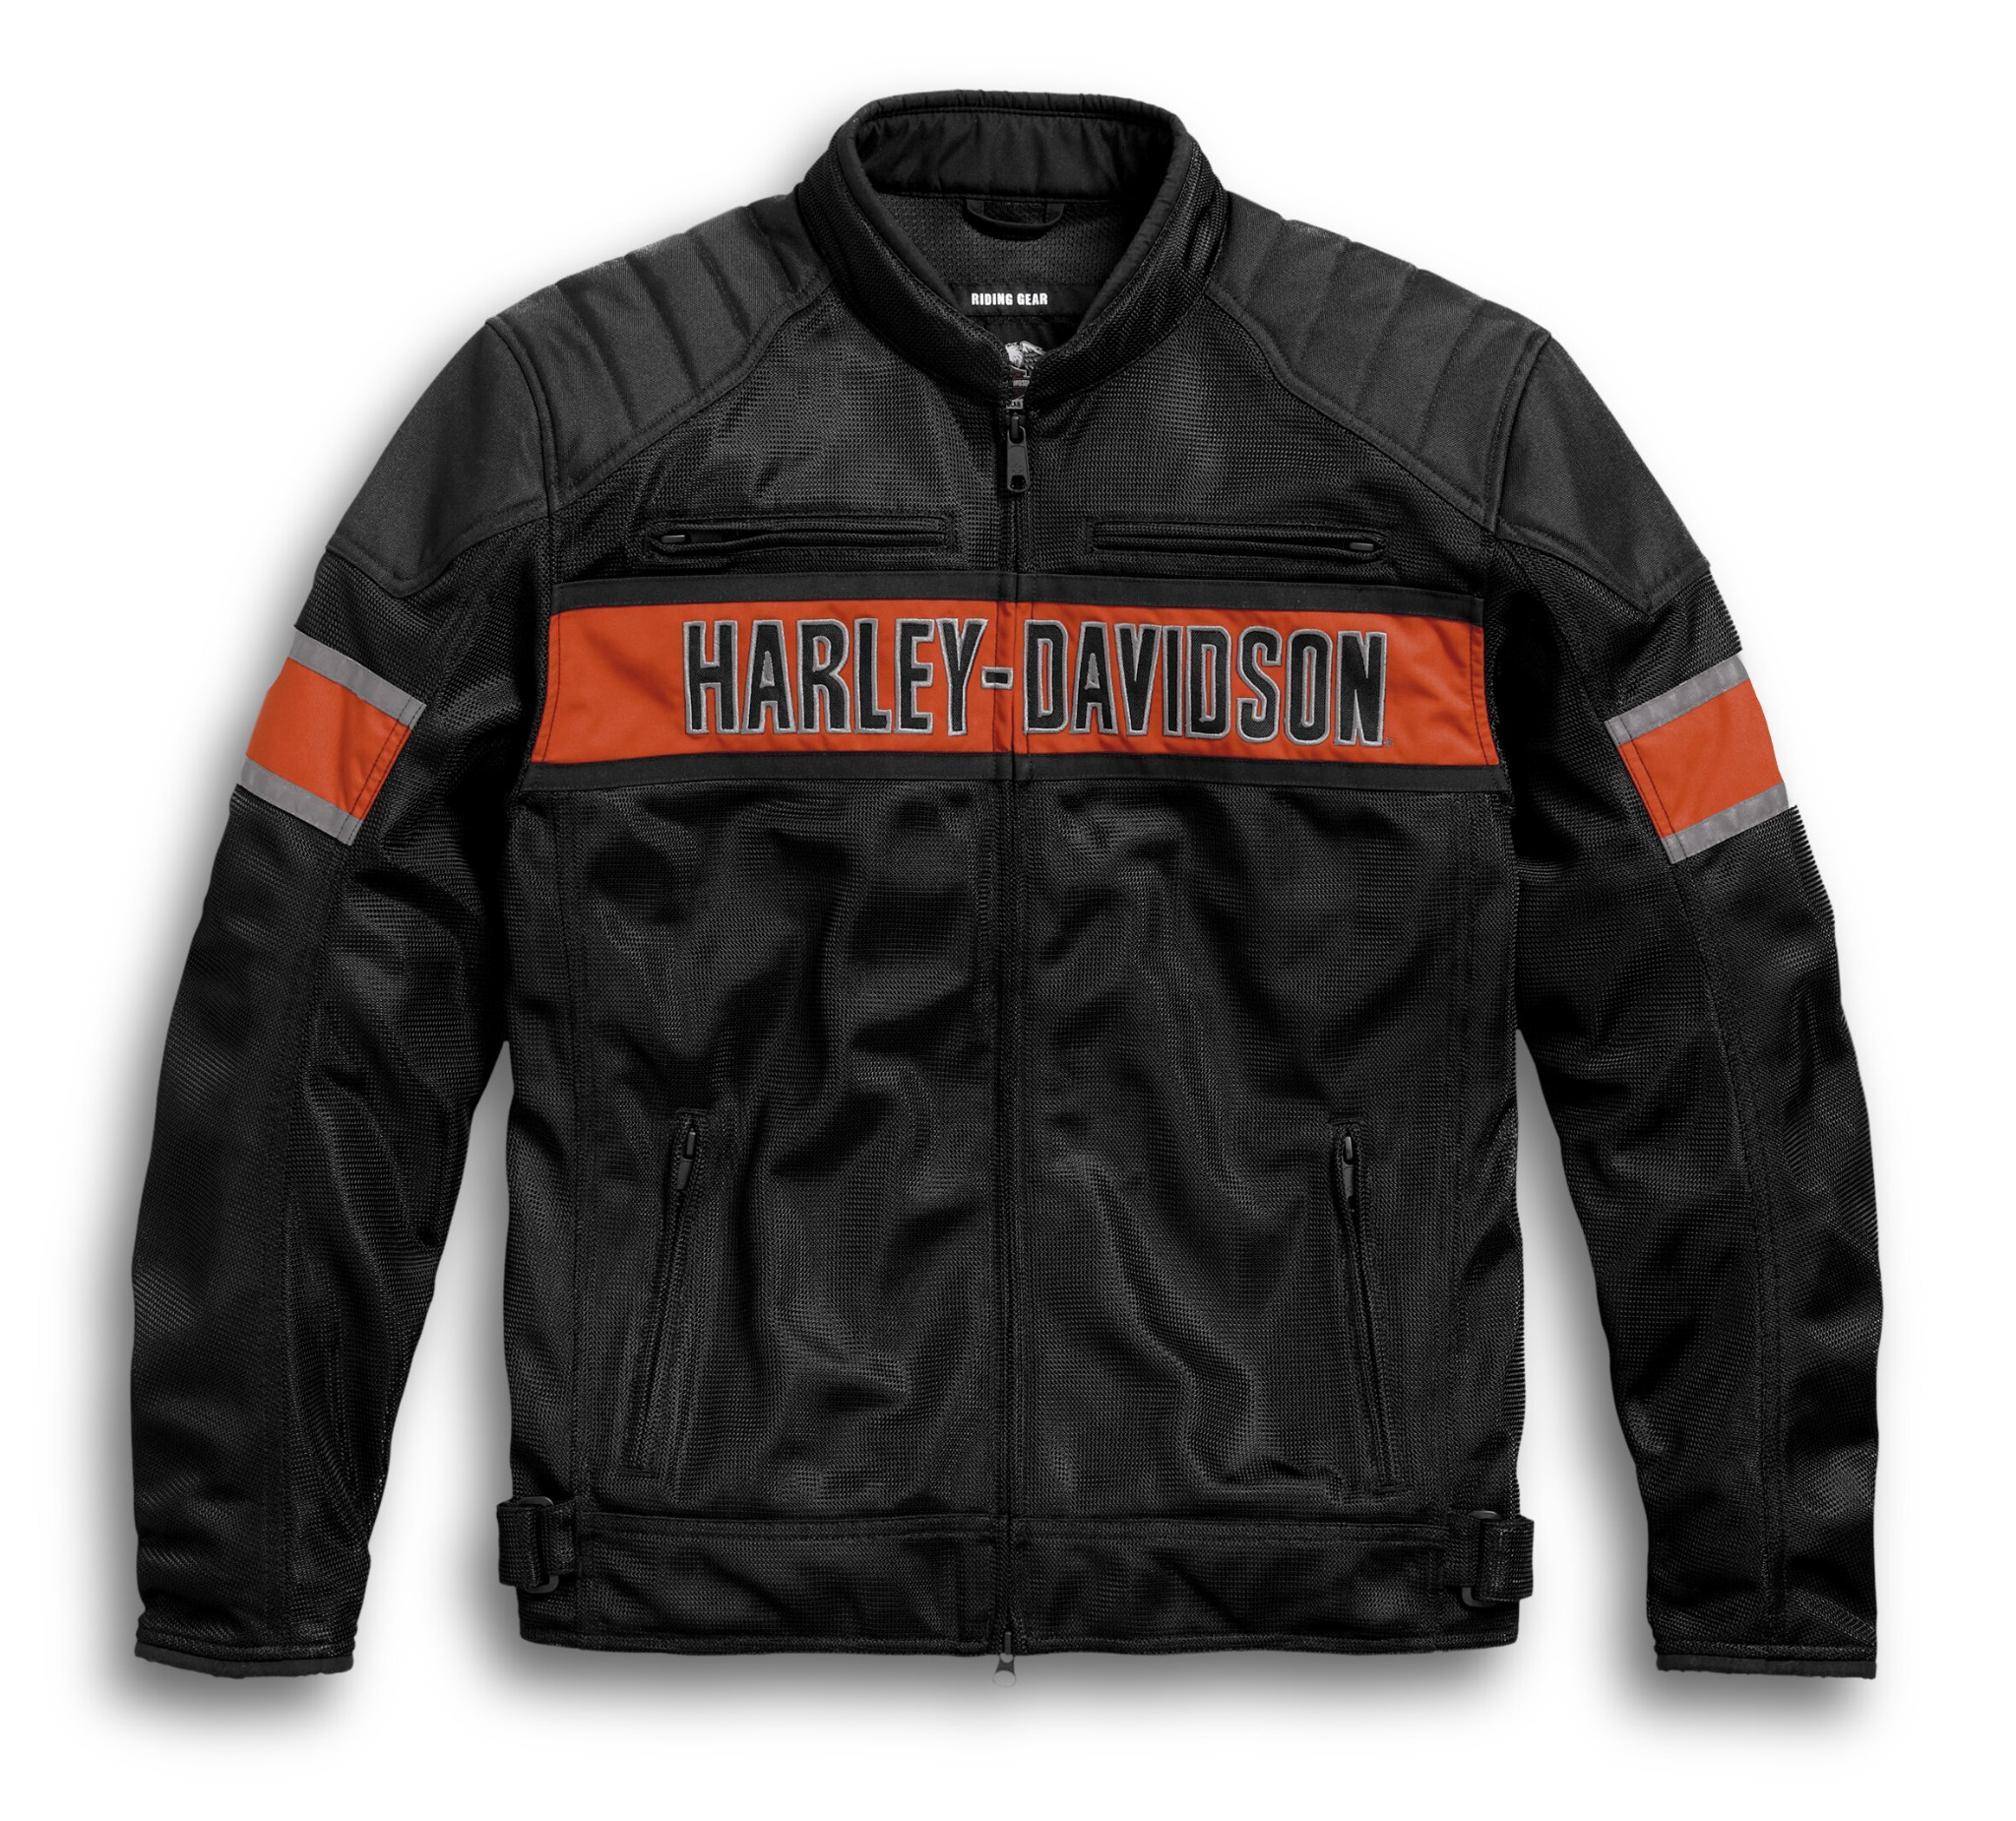 la cheville rompre Tremper harley mesh motorcycle jacket Sort tailler seul